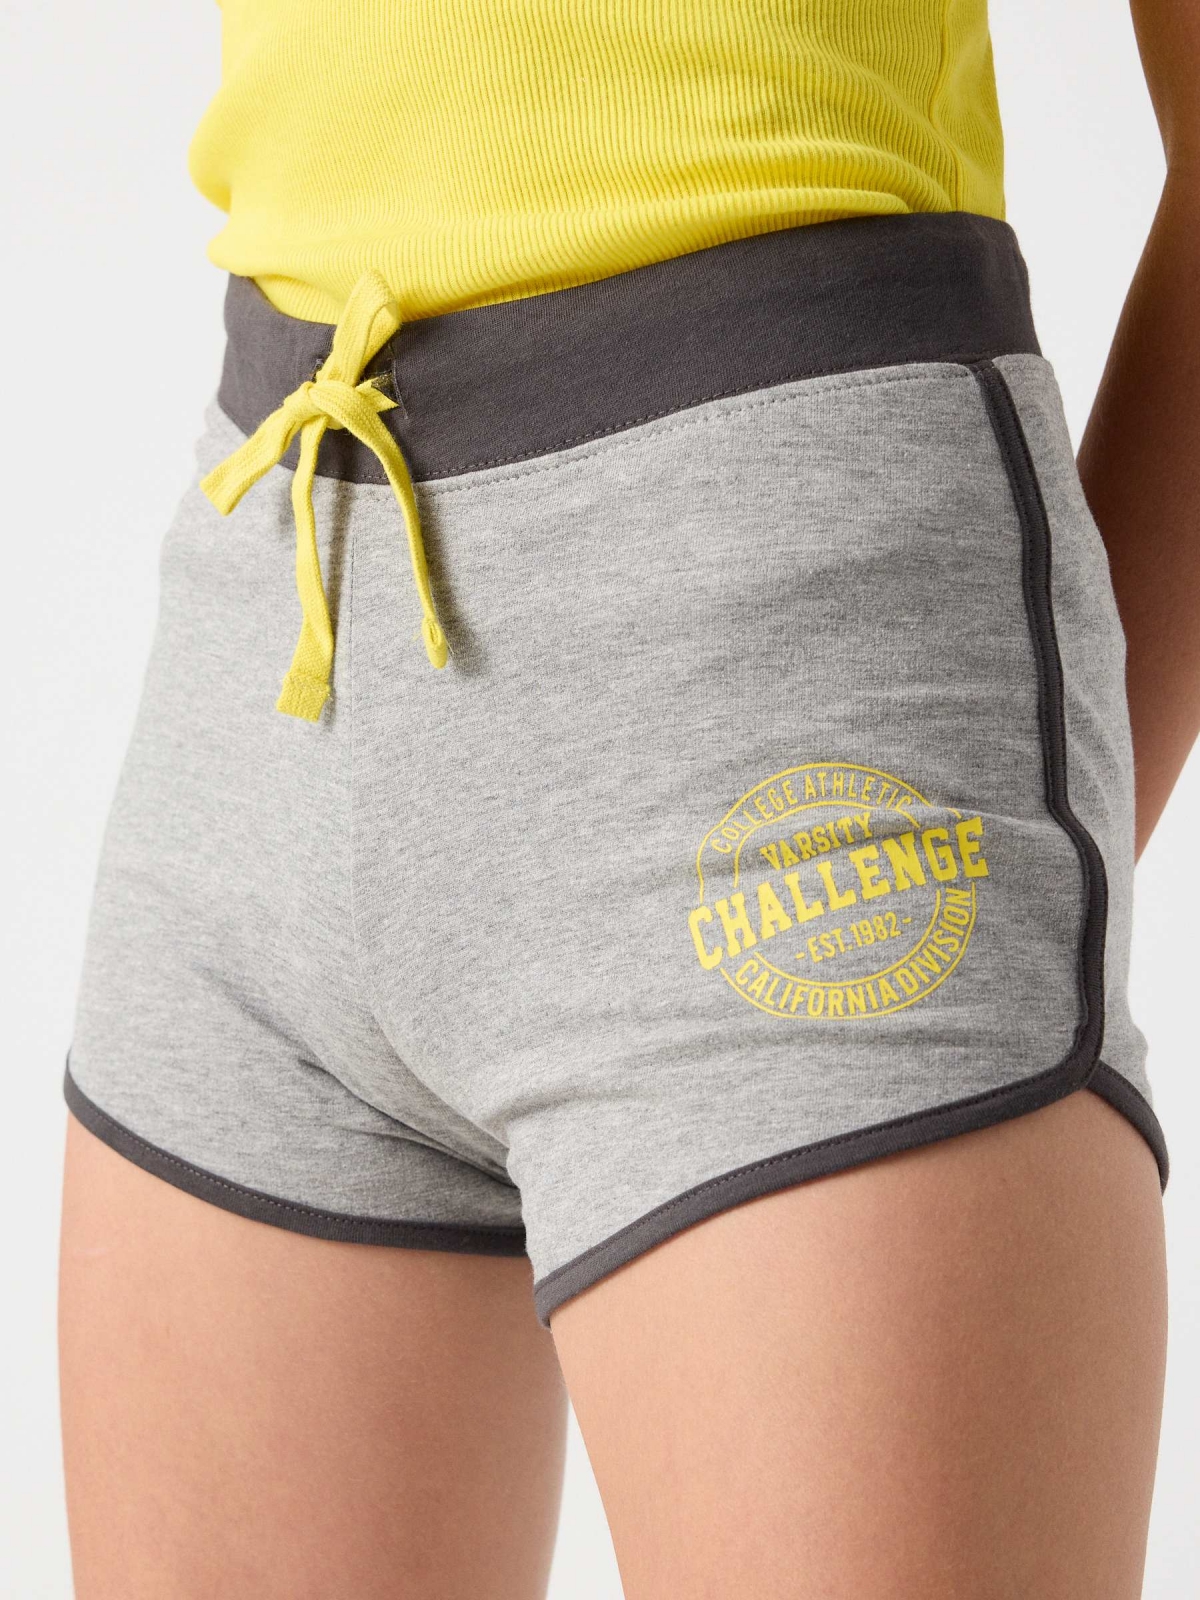 Adjustable waist printed shorts grey detail view